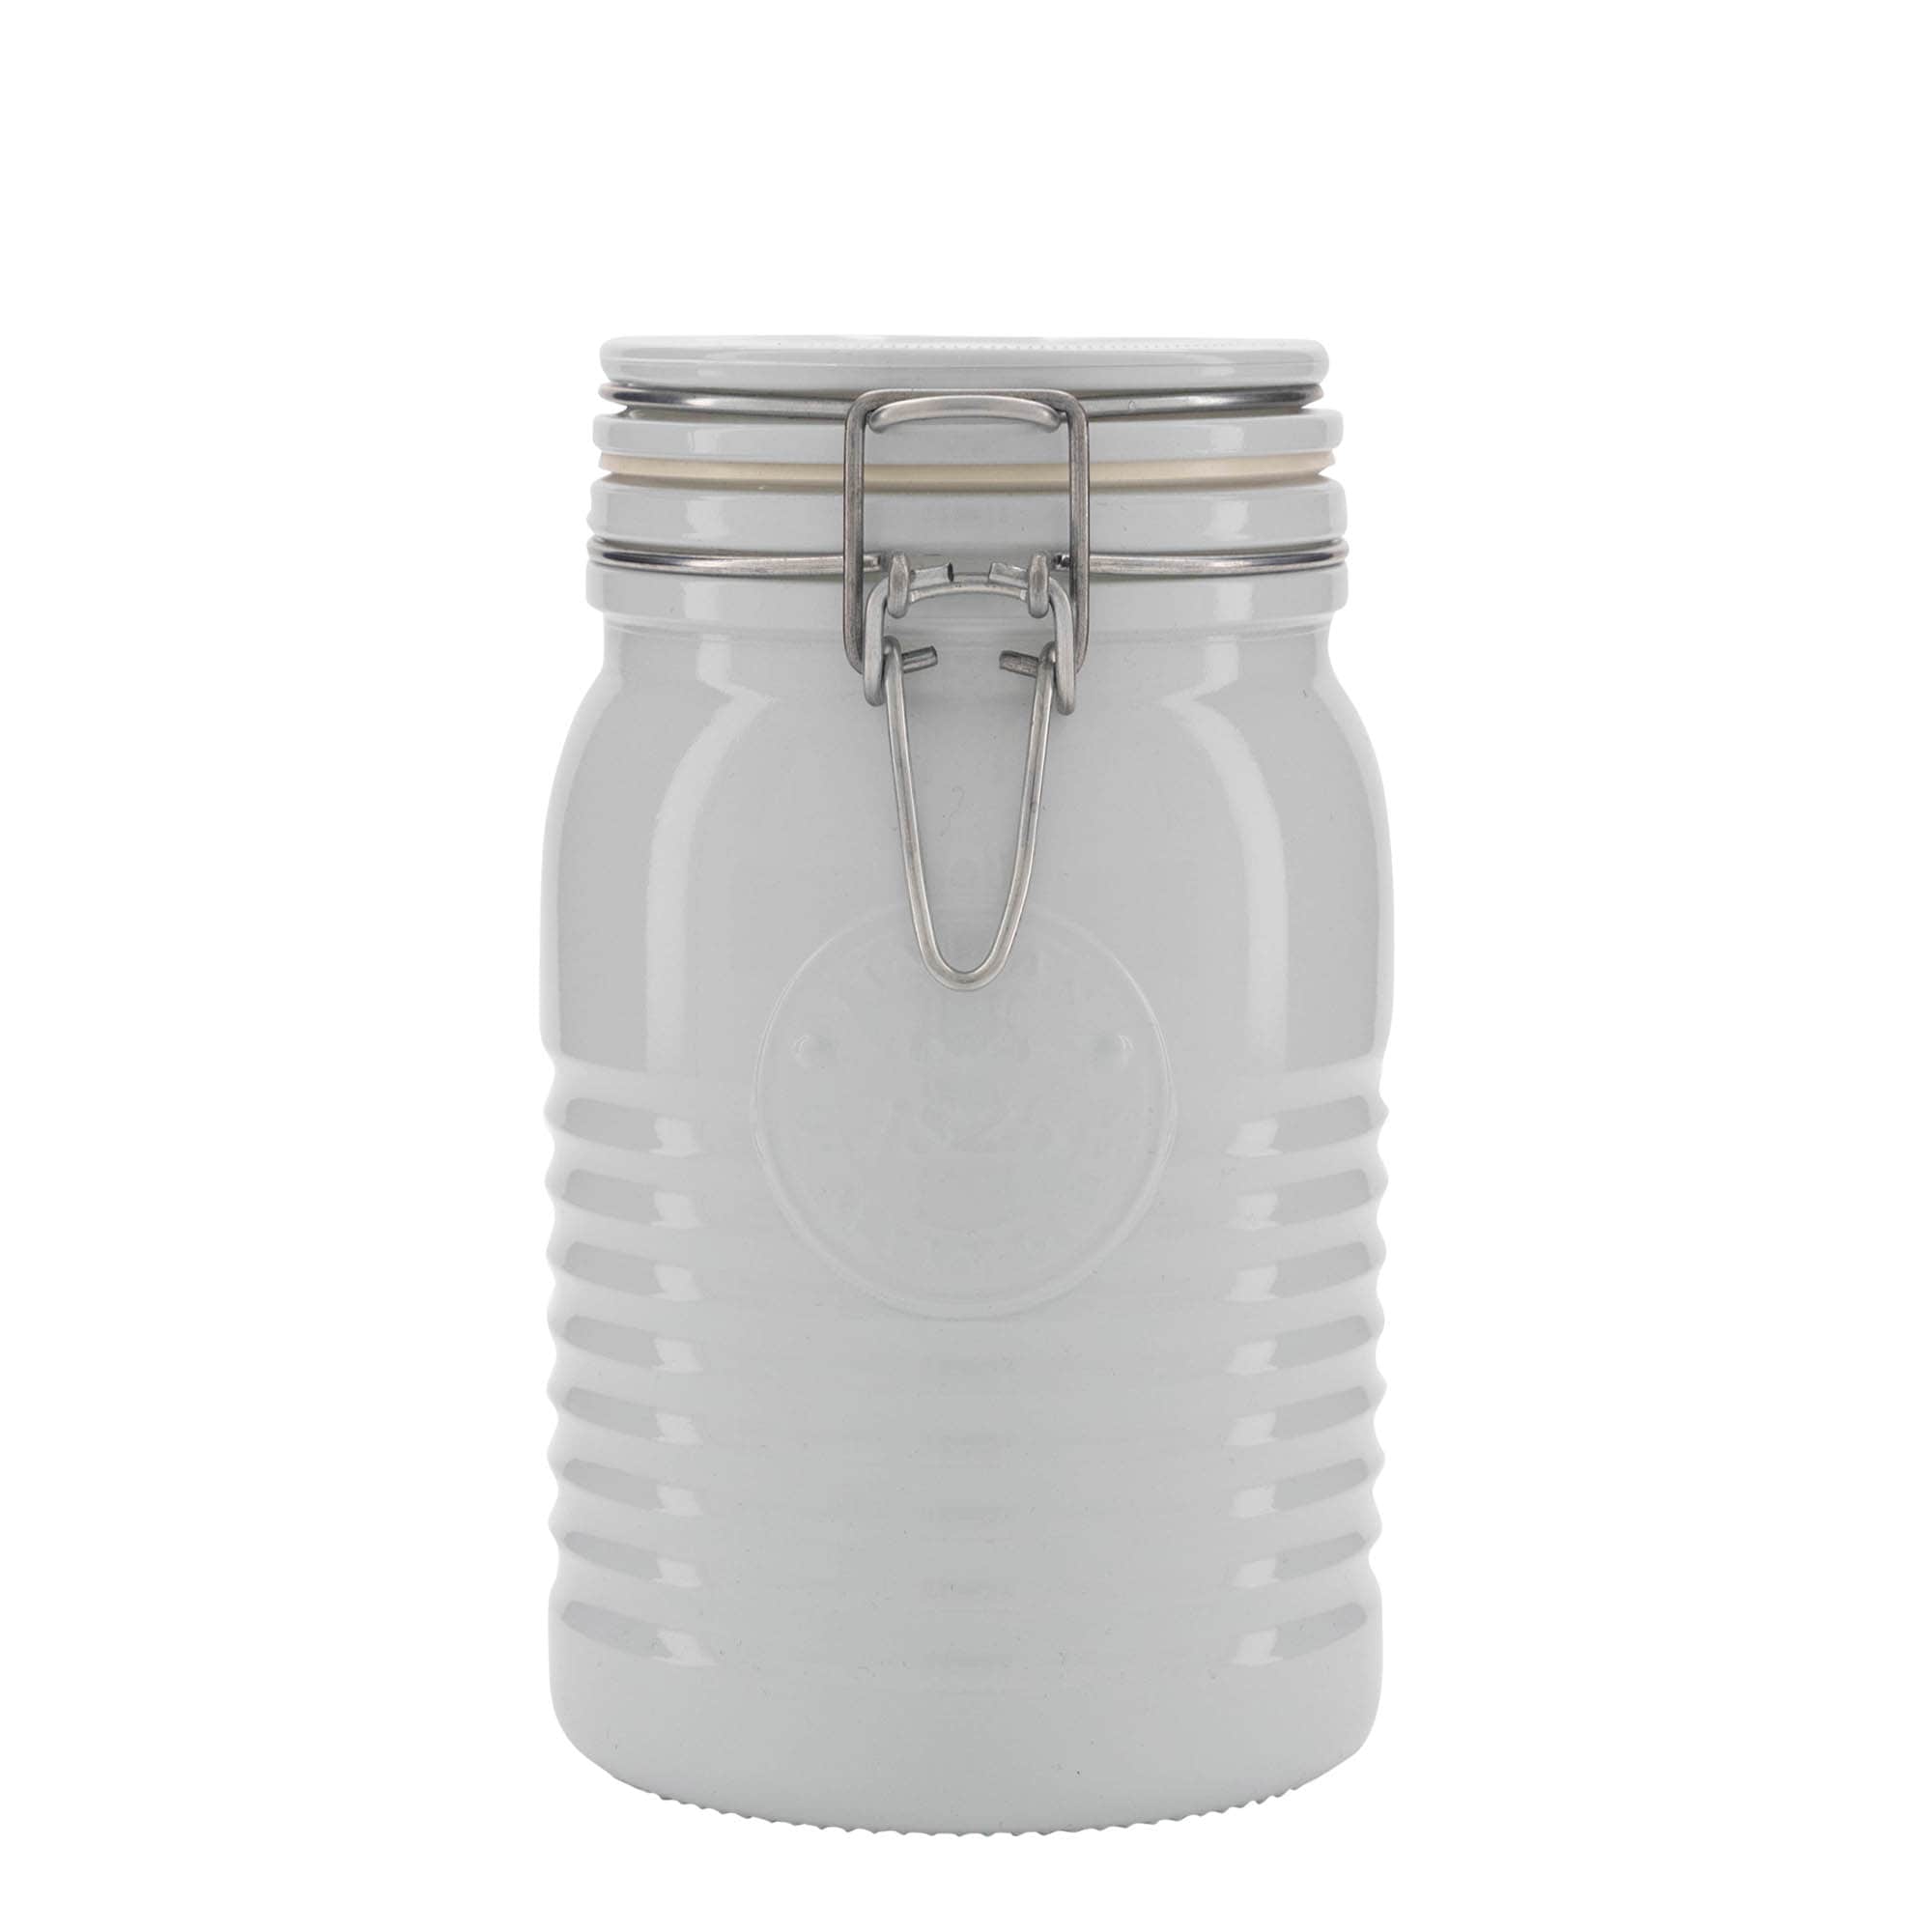 1,000 ml clip top jar 'Officina 1825', white, closure: clip top